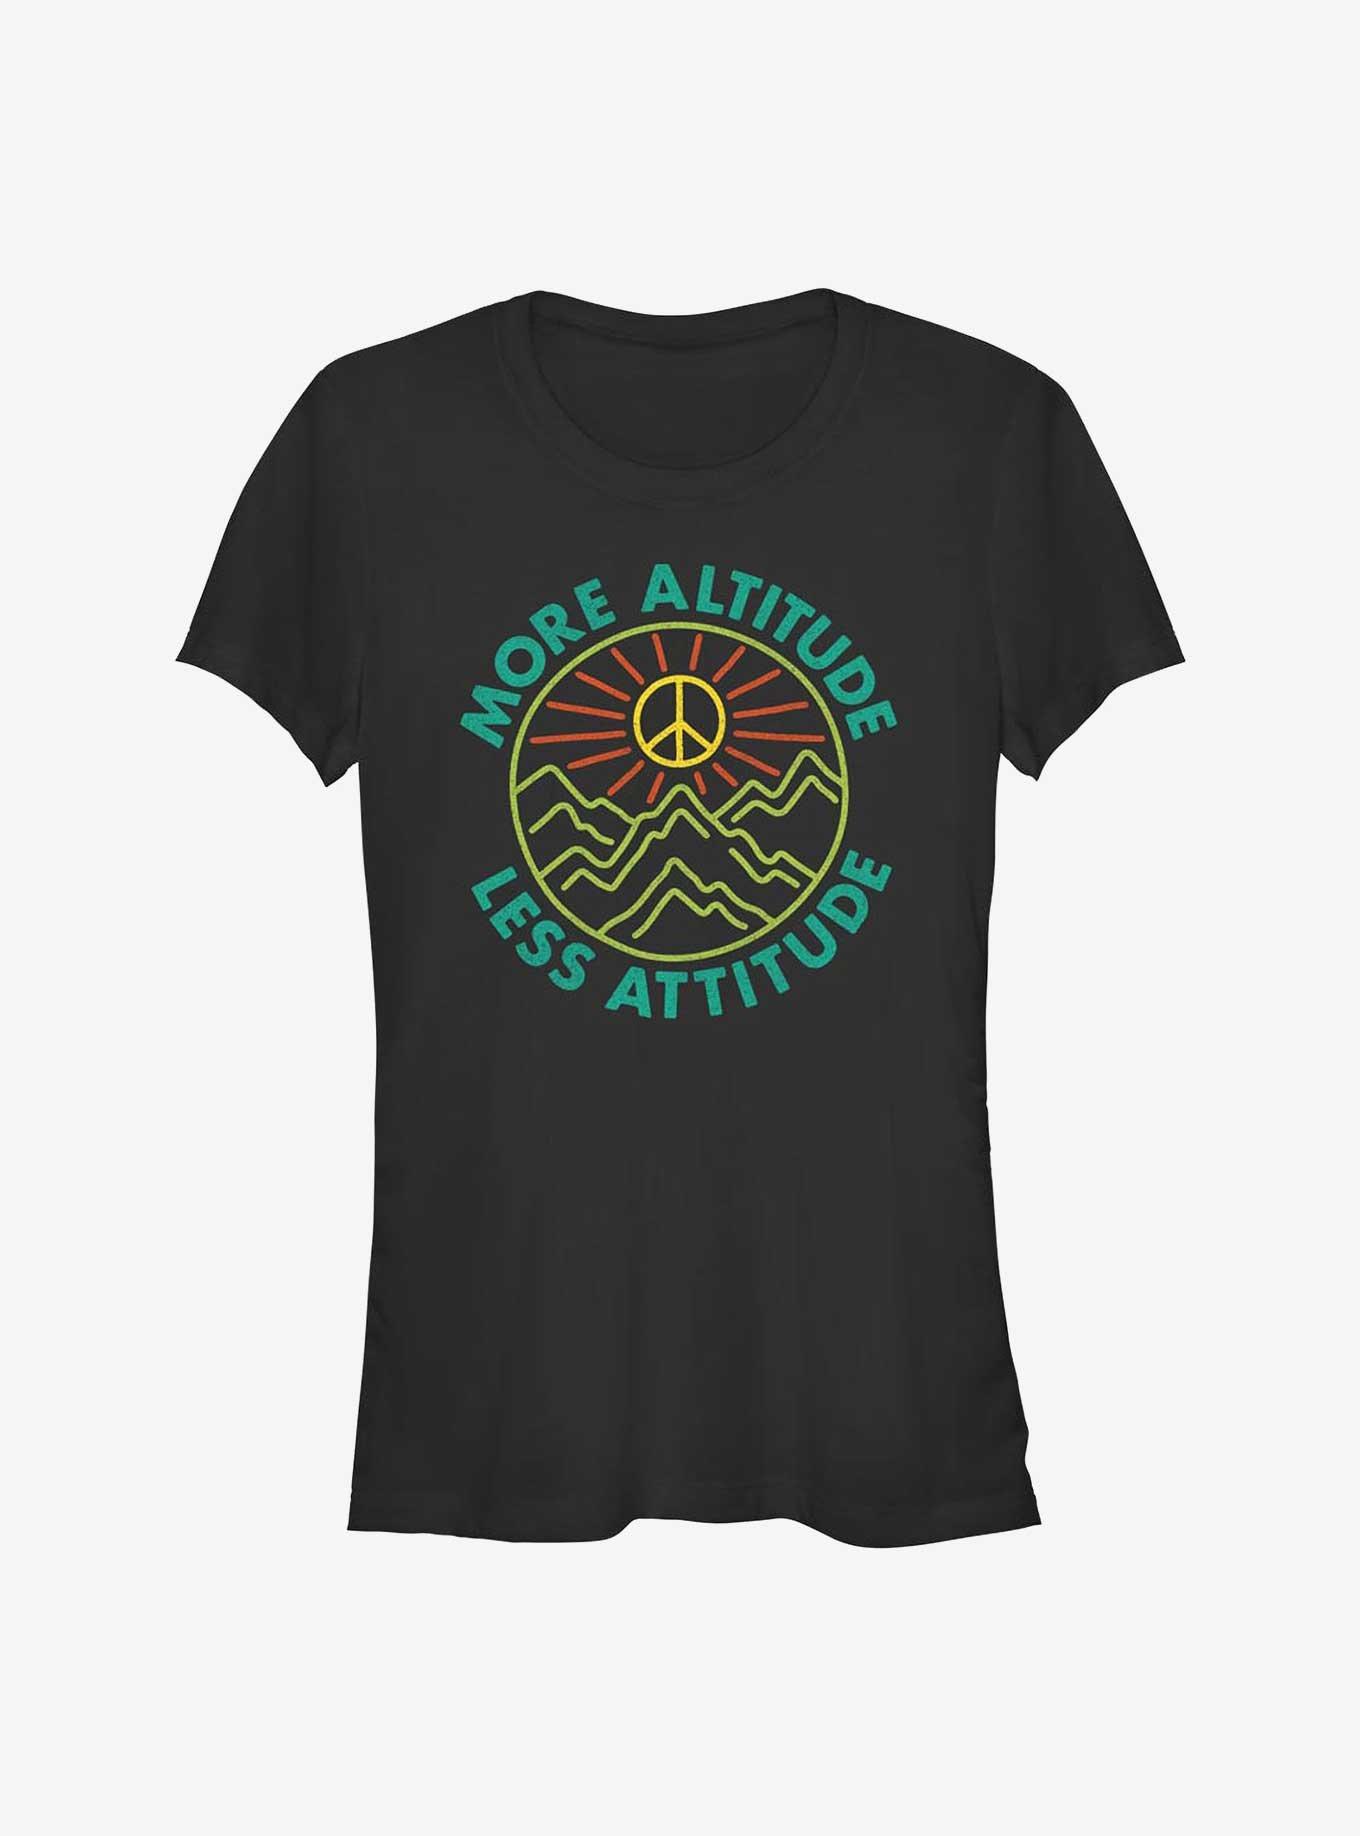 Less Attitude Girls T-Shirt